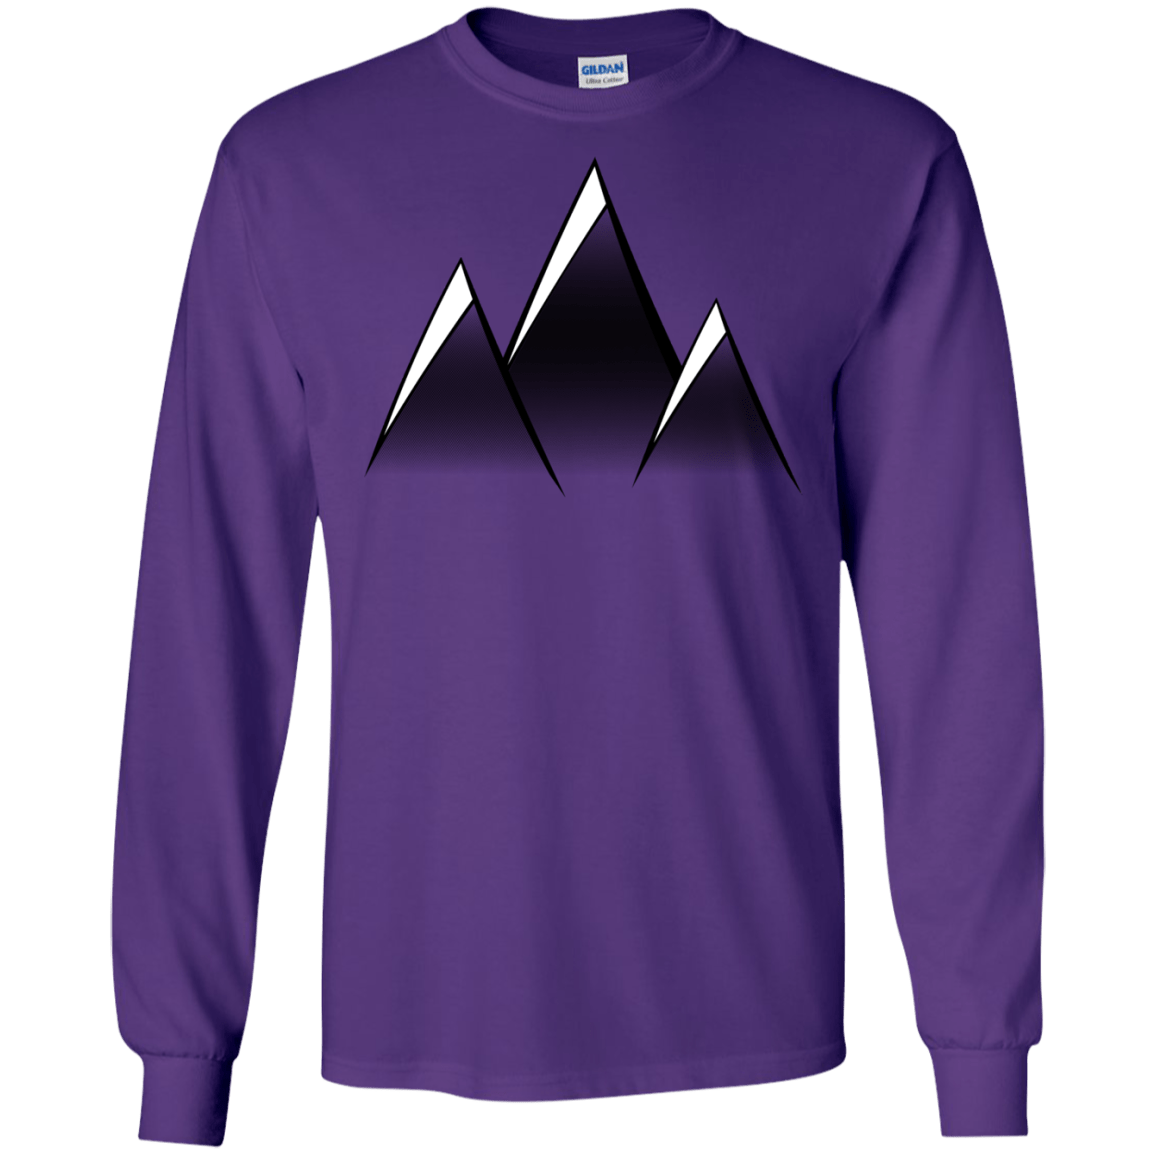 Mountain Blades Men's Long Sleeve T-Shirt